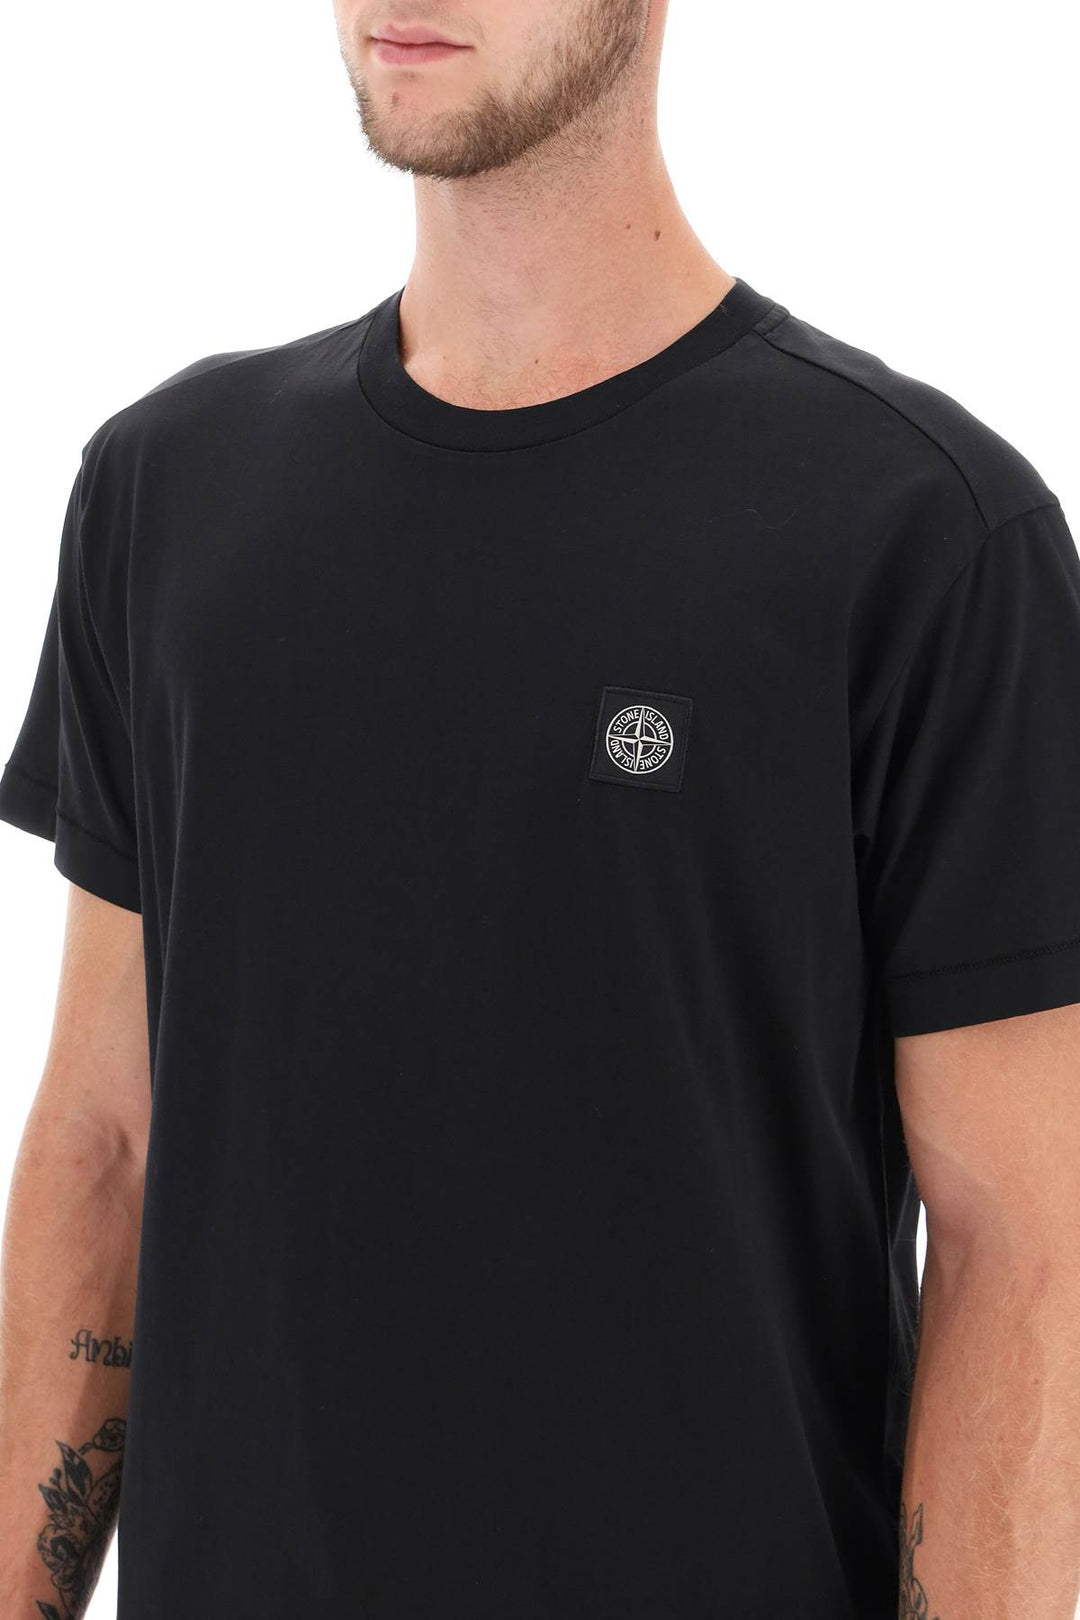 Stone Island Logo Patch T Shirt   Black